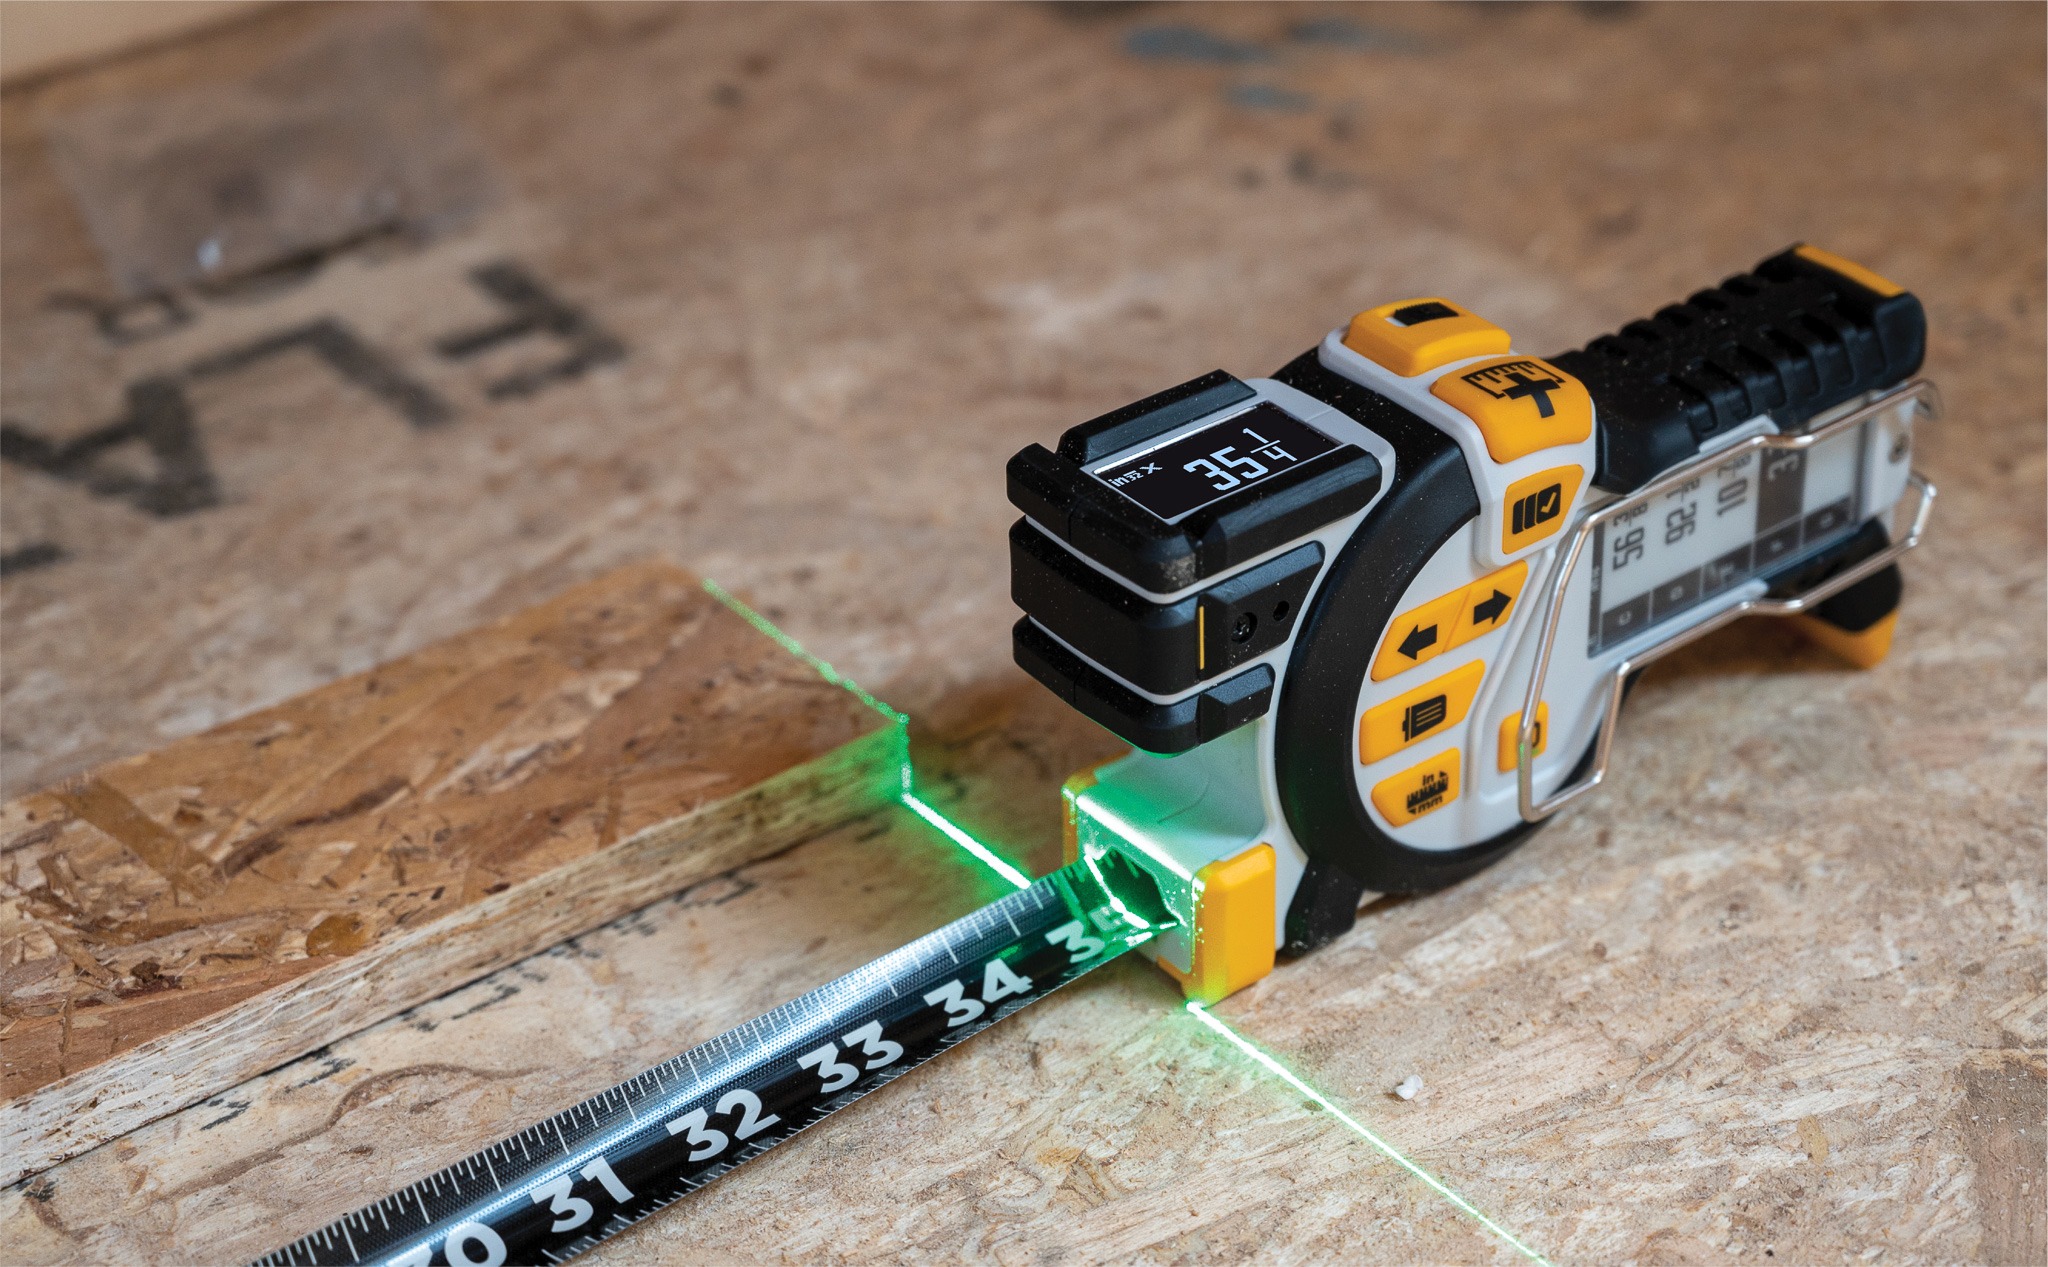 2-in-1 Digital Laser Tape Measure by Sharper Image @